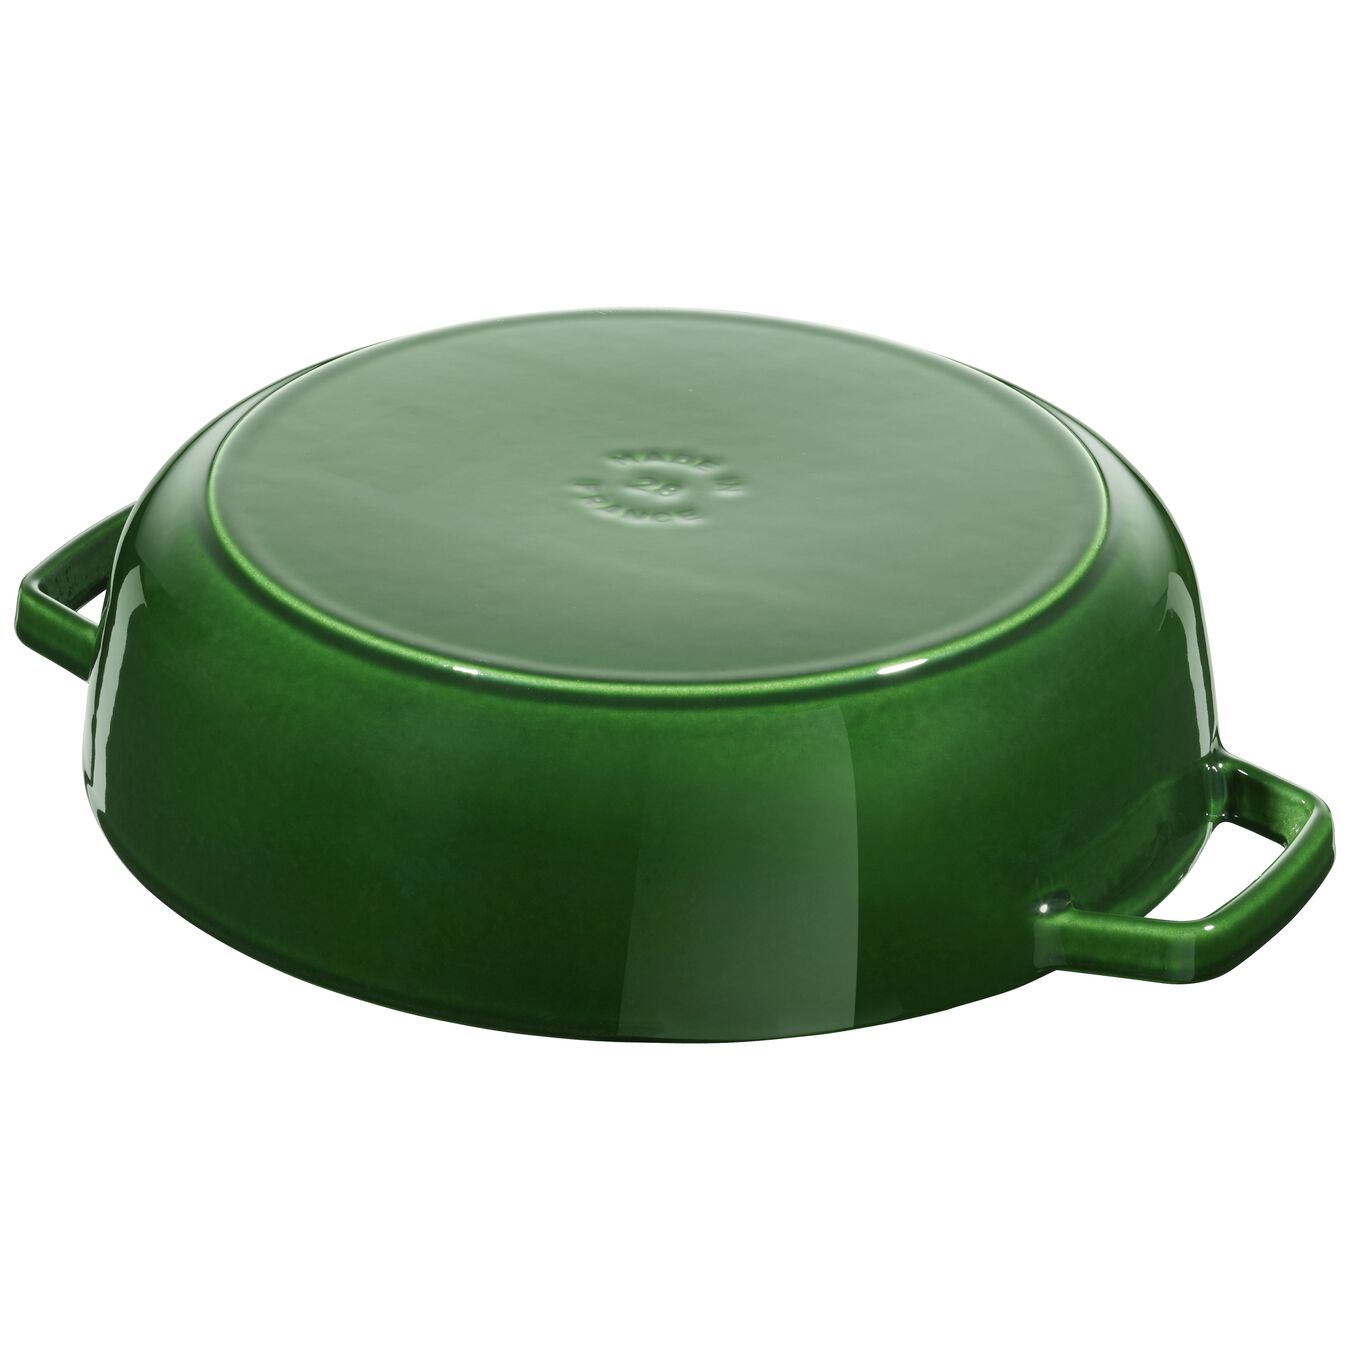 24 cm round Cast iron Saute pan Chistera basil-green,,large 6